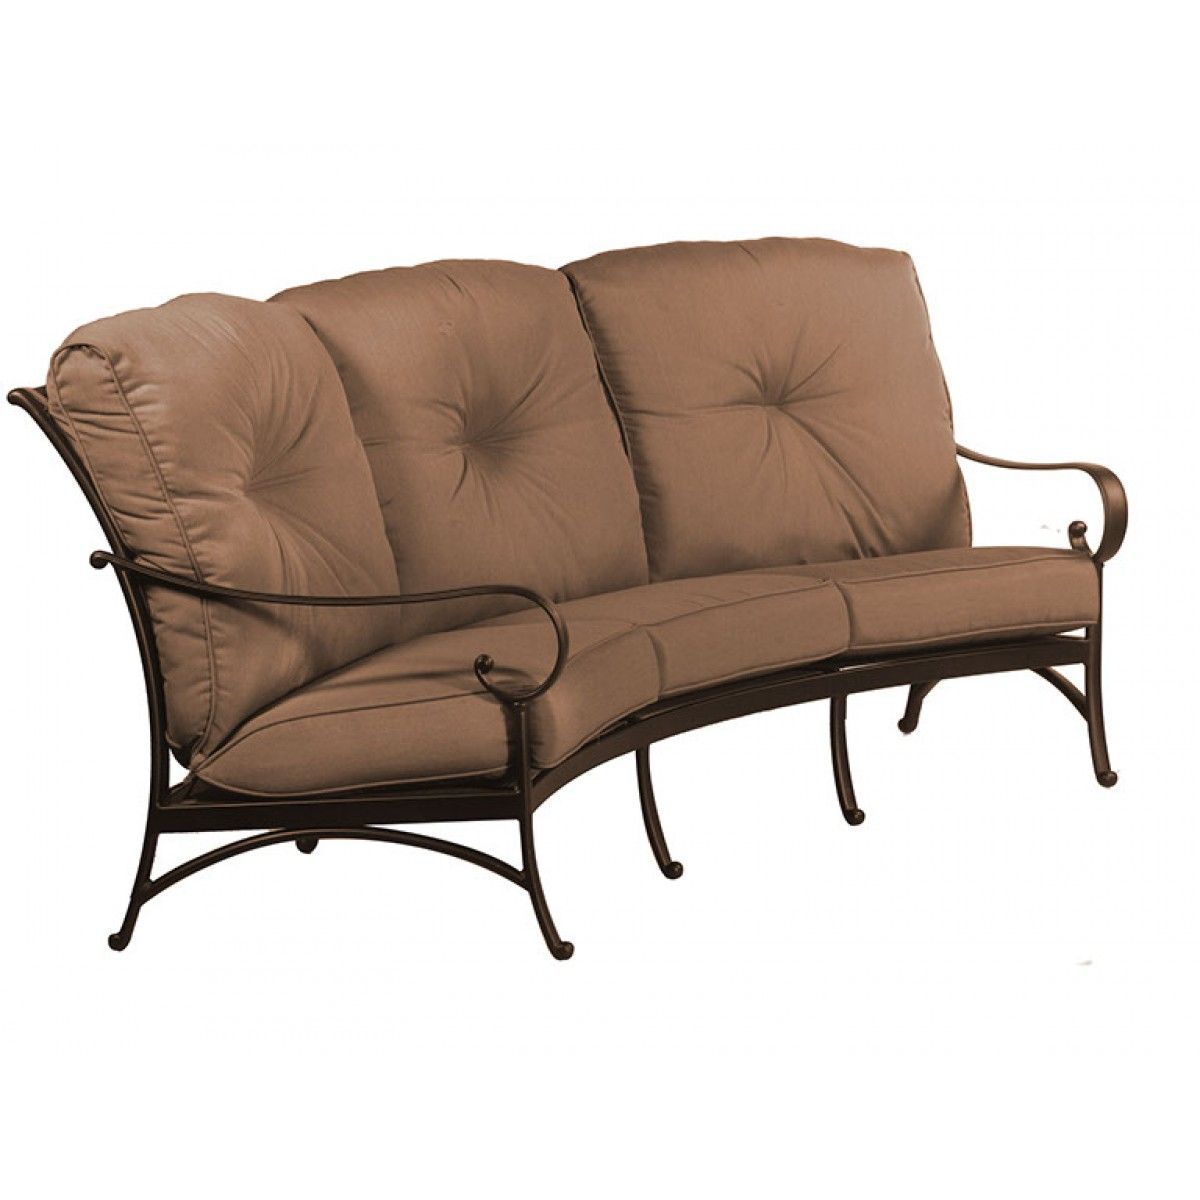 Hanamint Westfield Cast Aluminum Dining Chair Shown In Terra Mist Regarding Mist Fabric Outdoor Patio Sets (View 7 of 15)